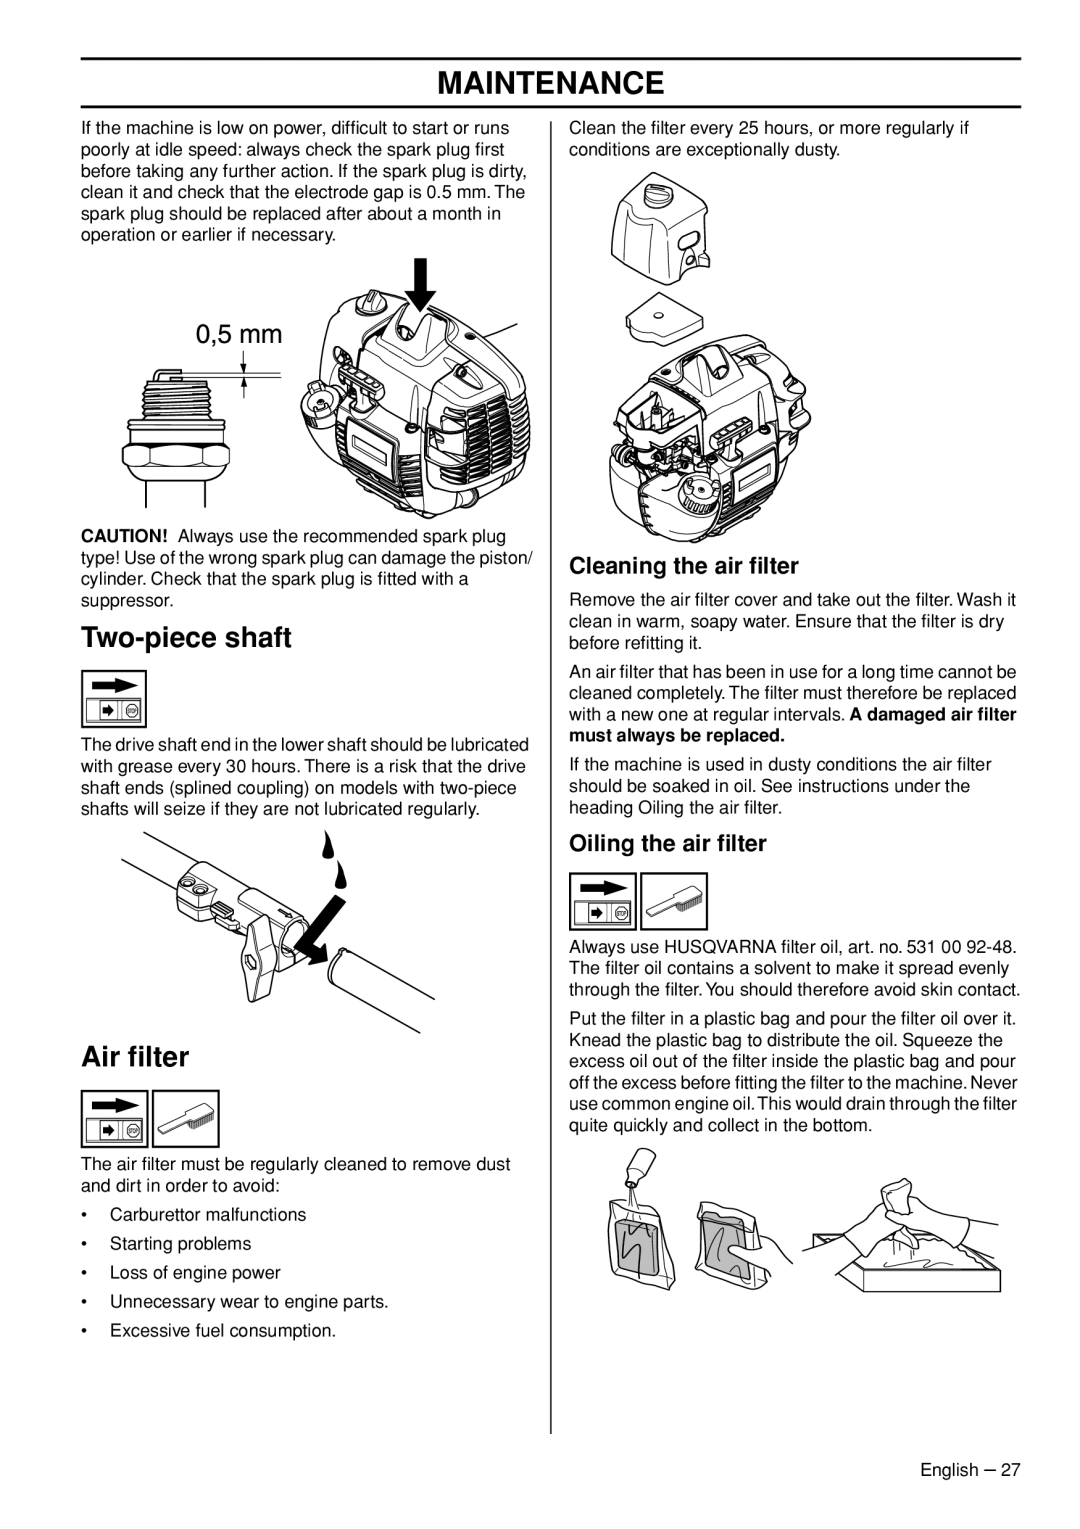 Husqvarna 327P5X manual Two-pieceshaft, Air ﬁlter, Cleaning the air ﬁlter, Oiling the air ﬁlter, Maintenance 